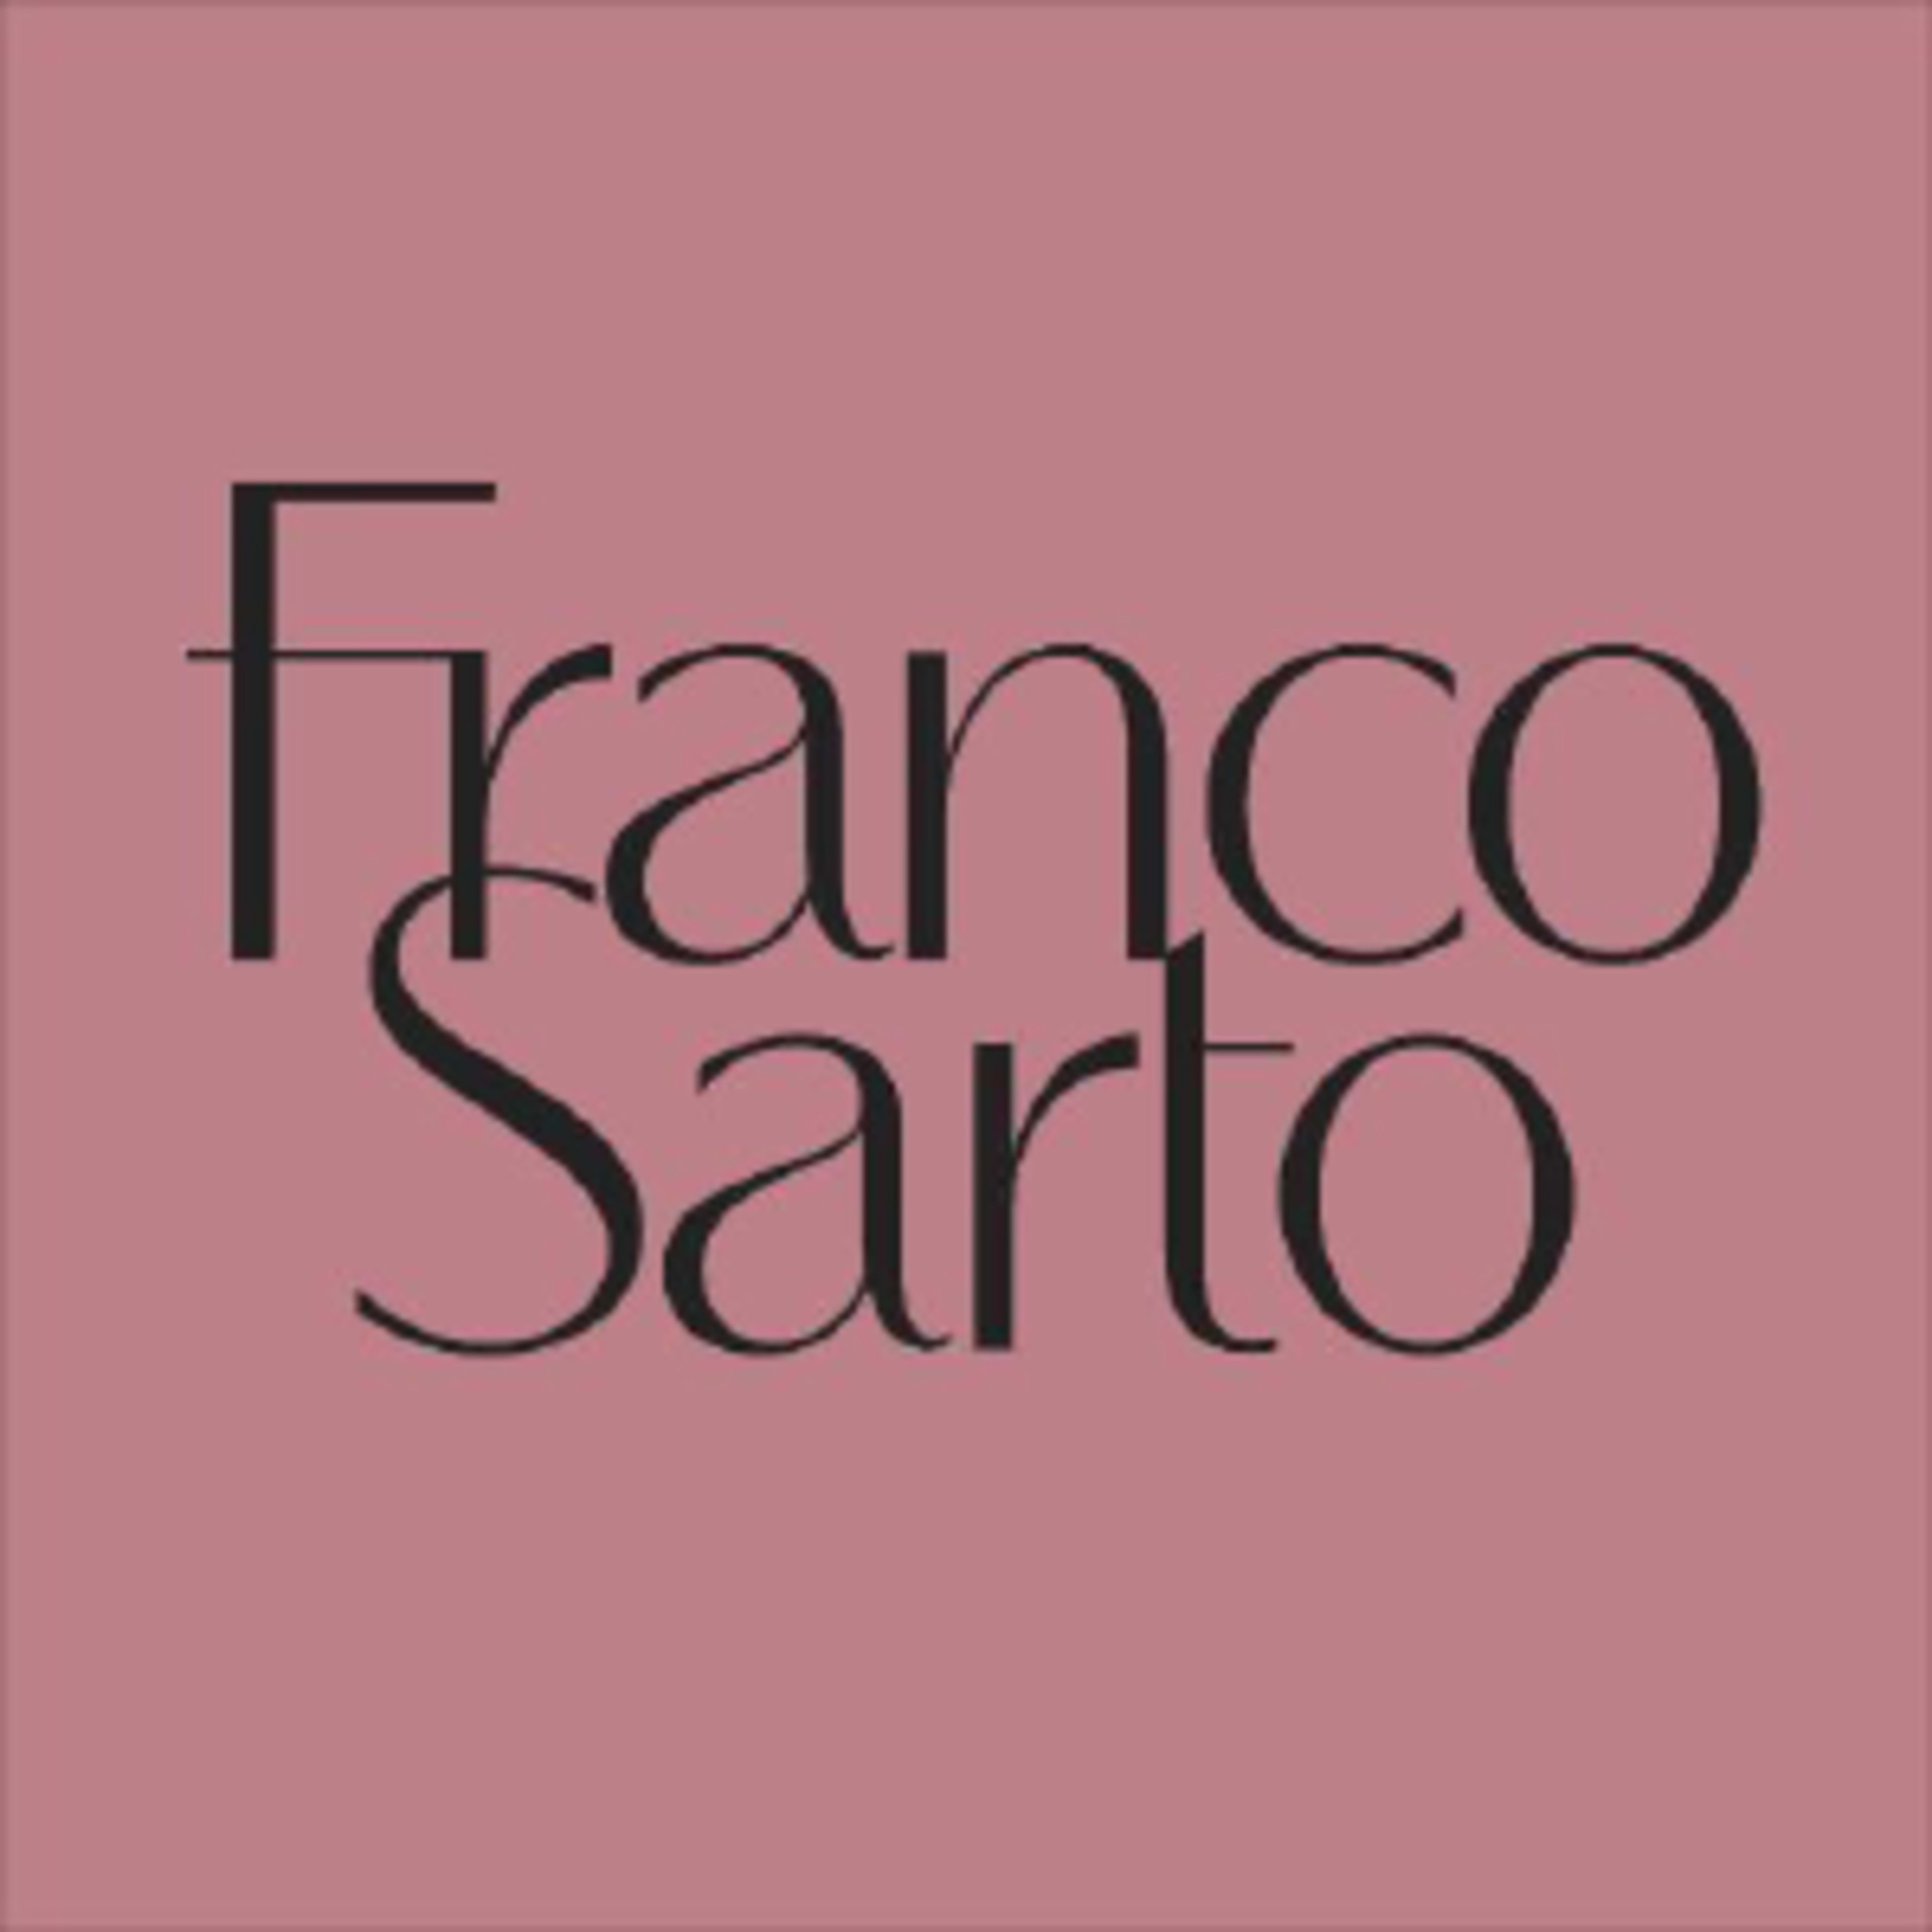 Franco SartoCode